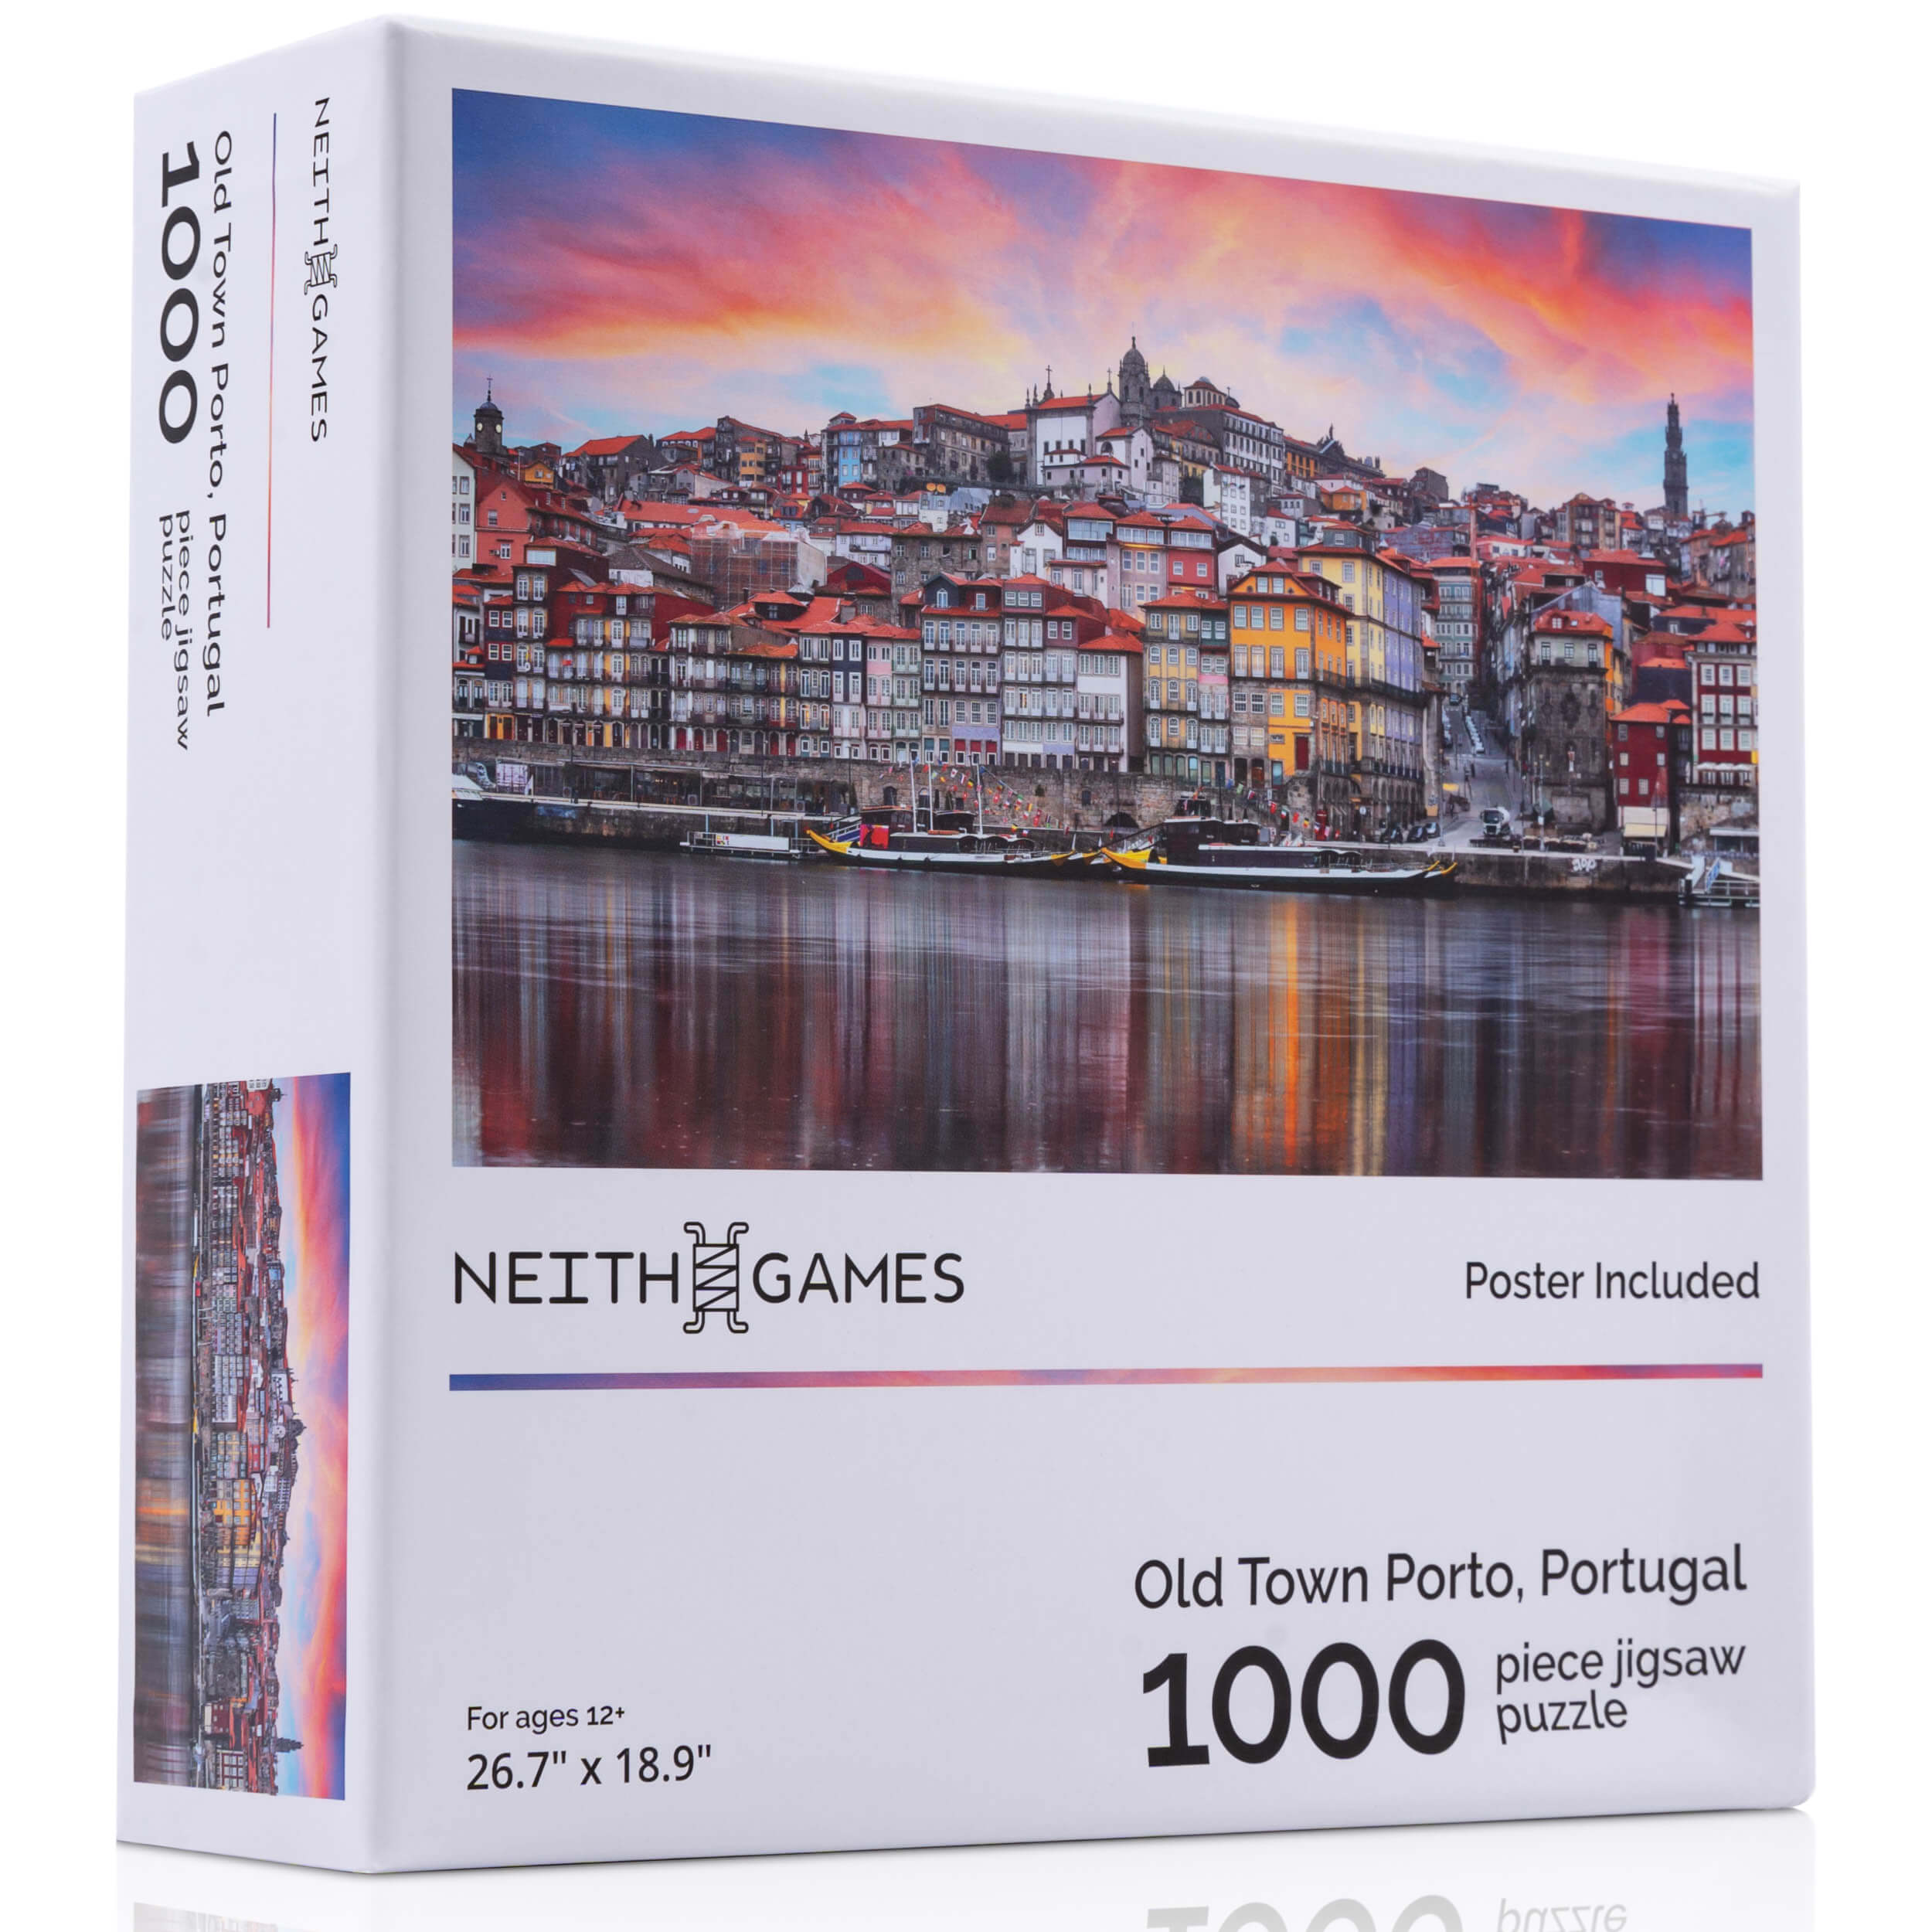 Old Town Porto - 1000 Piece Jigsaw Puzzle - Porto, Portugal